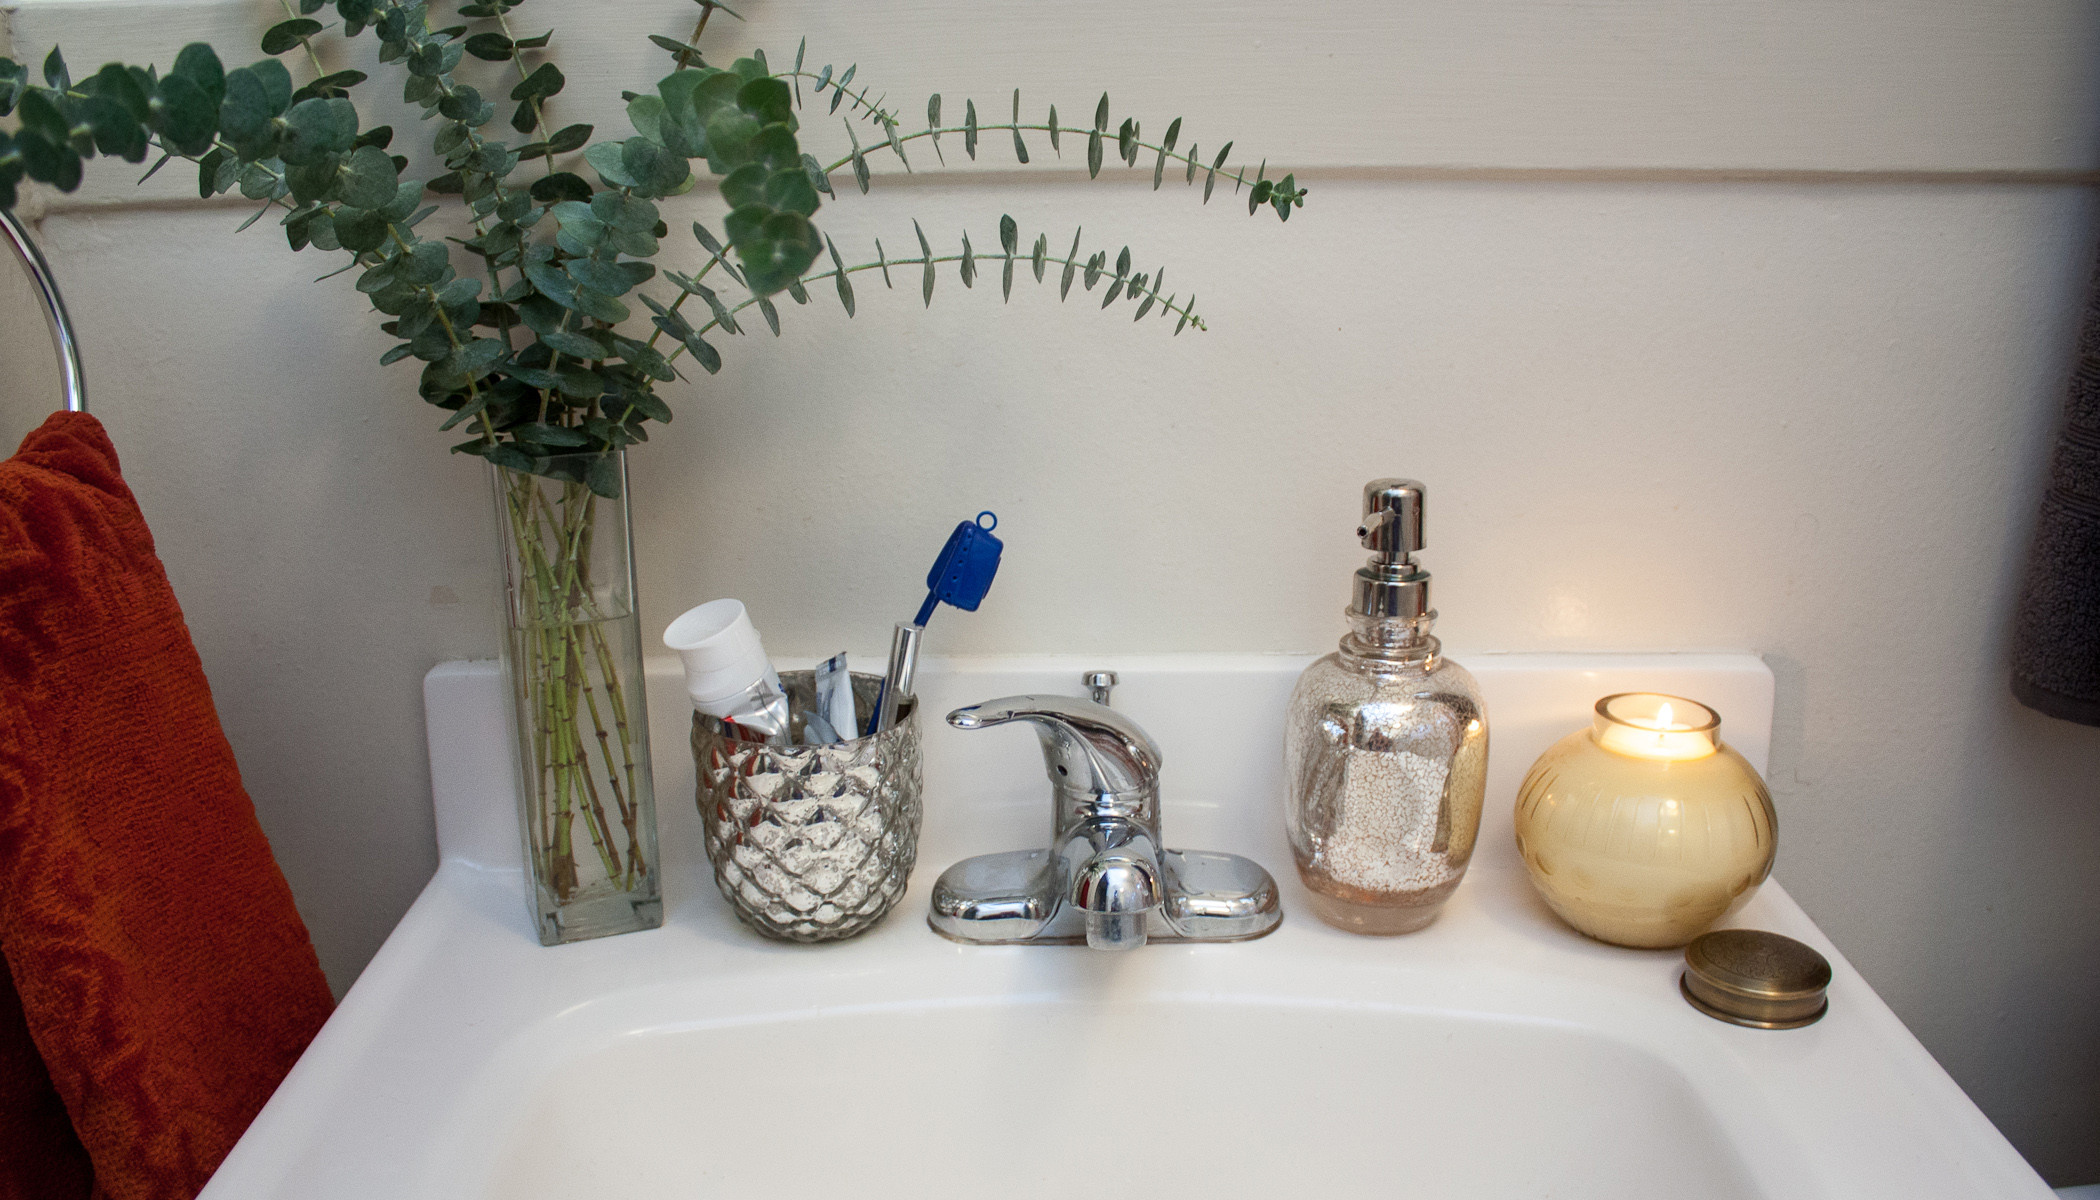 Target Bathroom Decor
 home decor bathroom refresh for fall